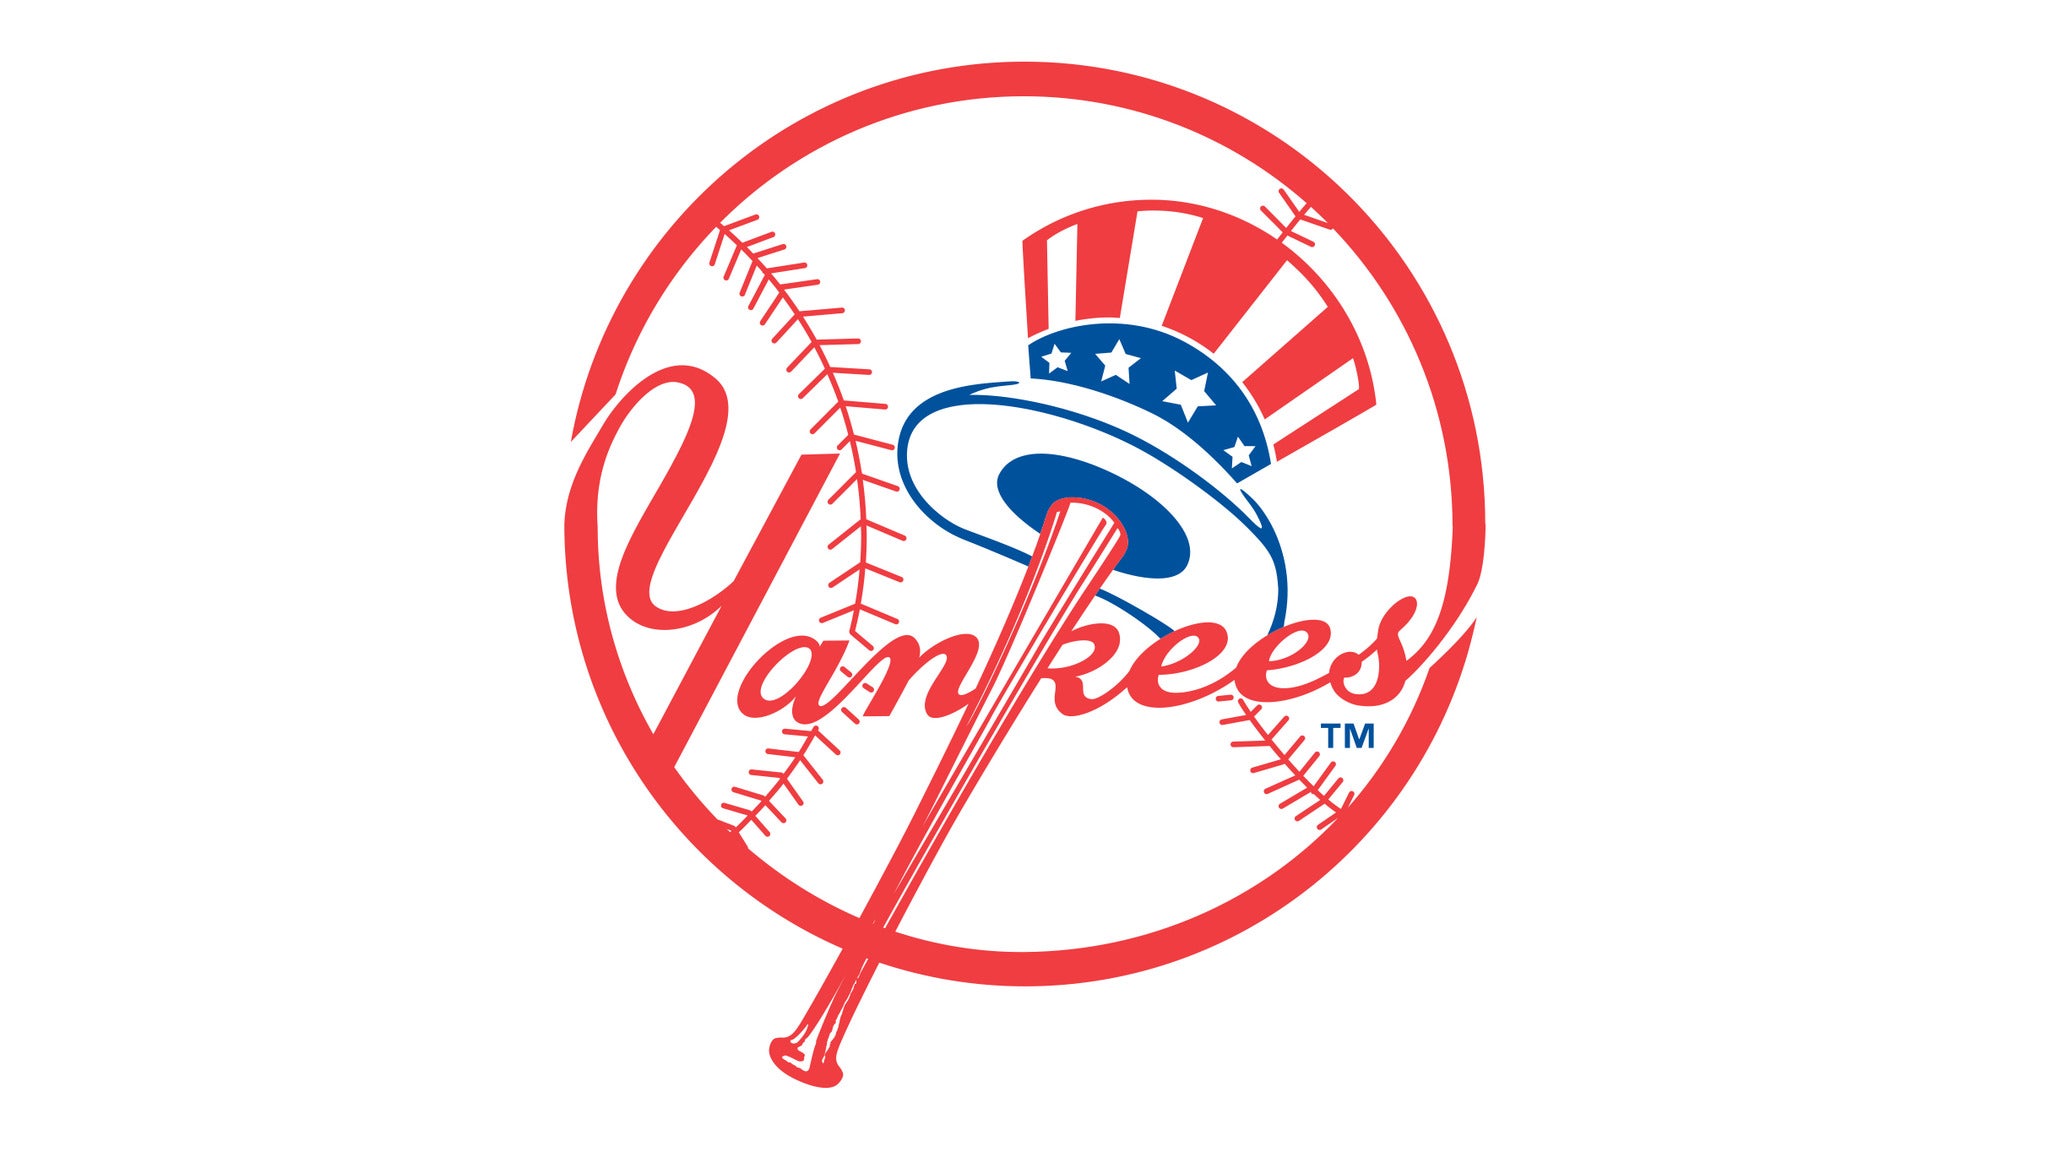 New York Yankees v. Cincinnati Reds